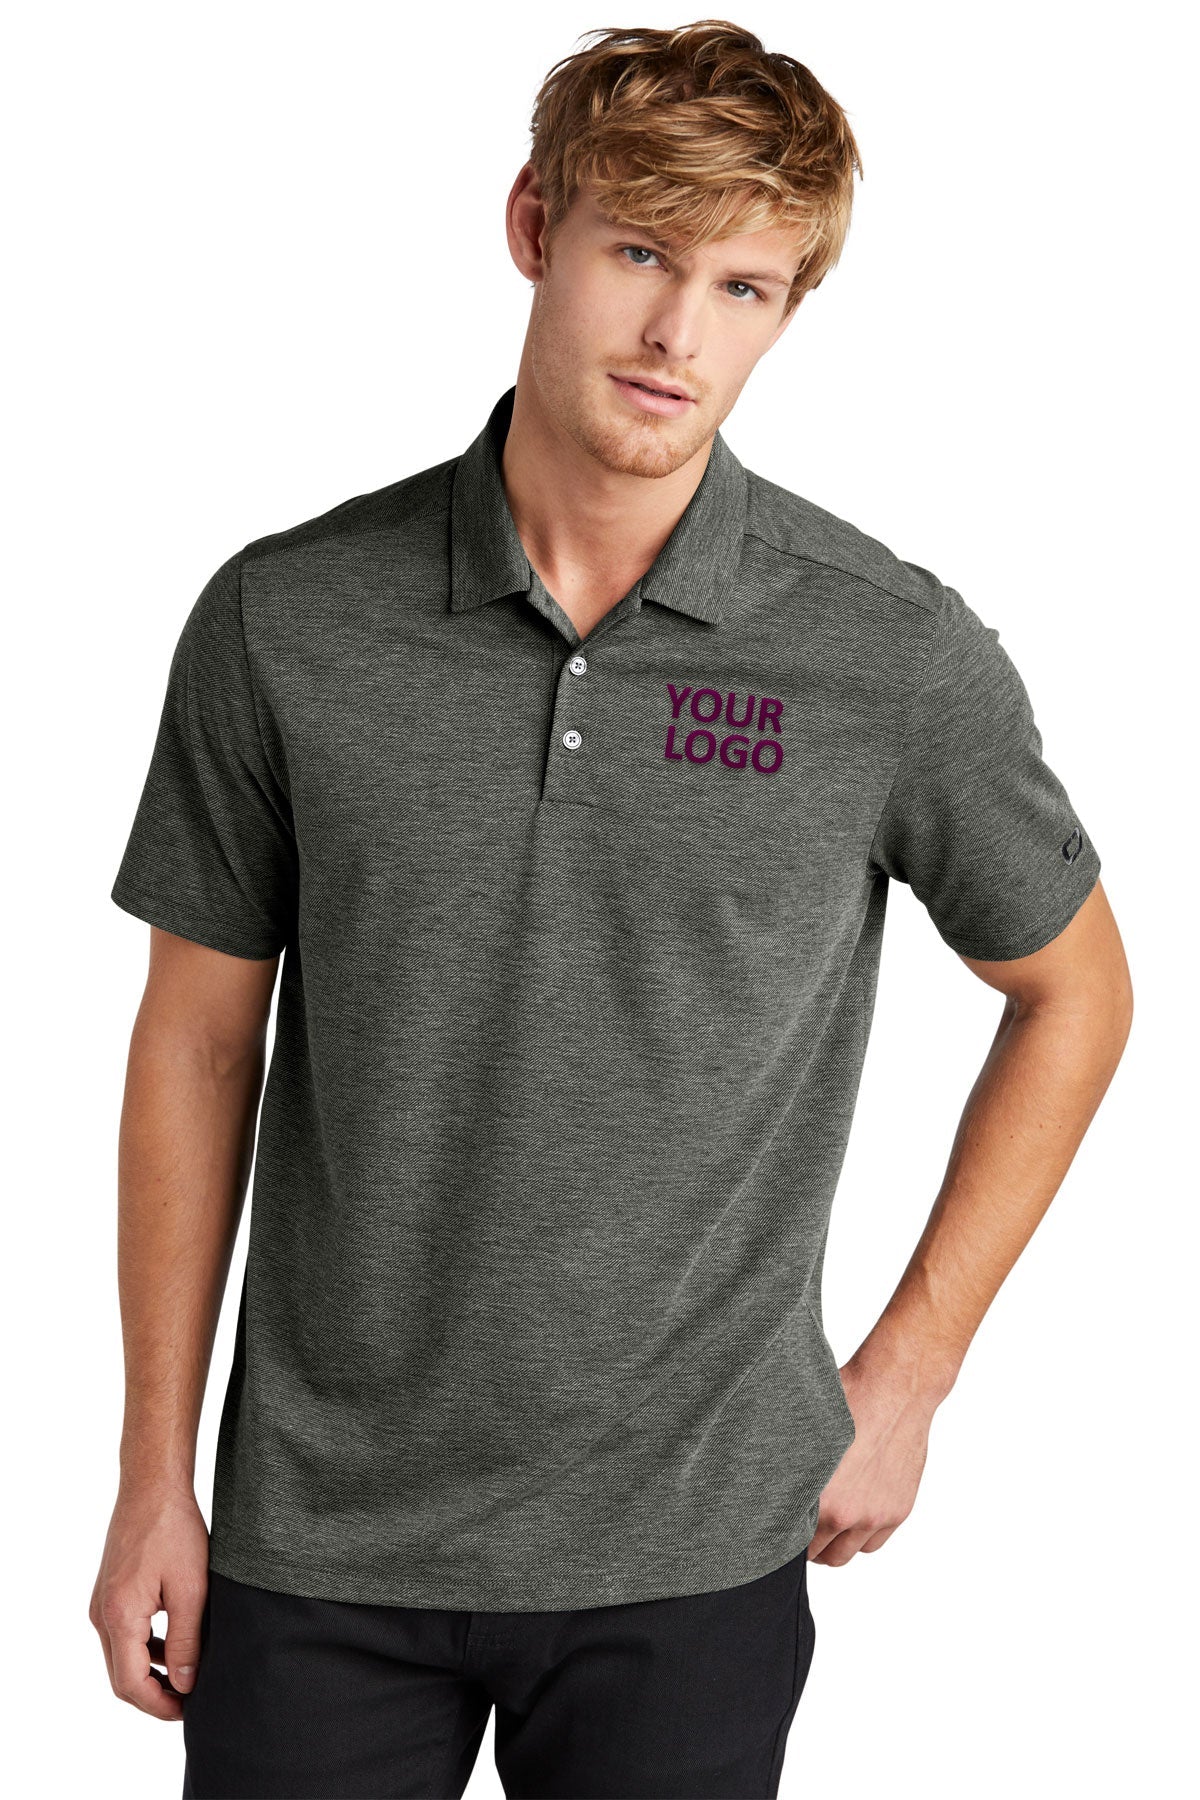 OGIO Tarmac Grey OG147 custom logo polo shirts